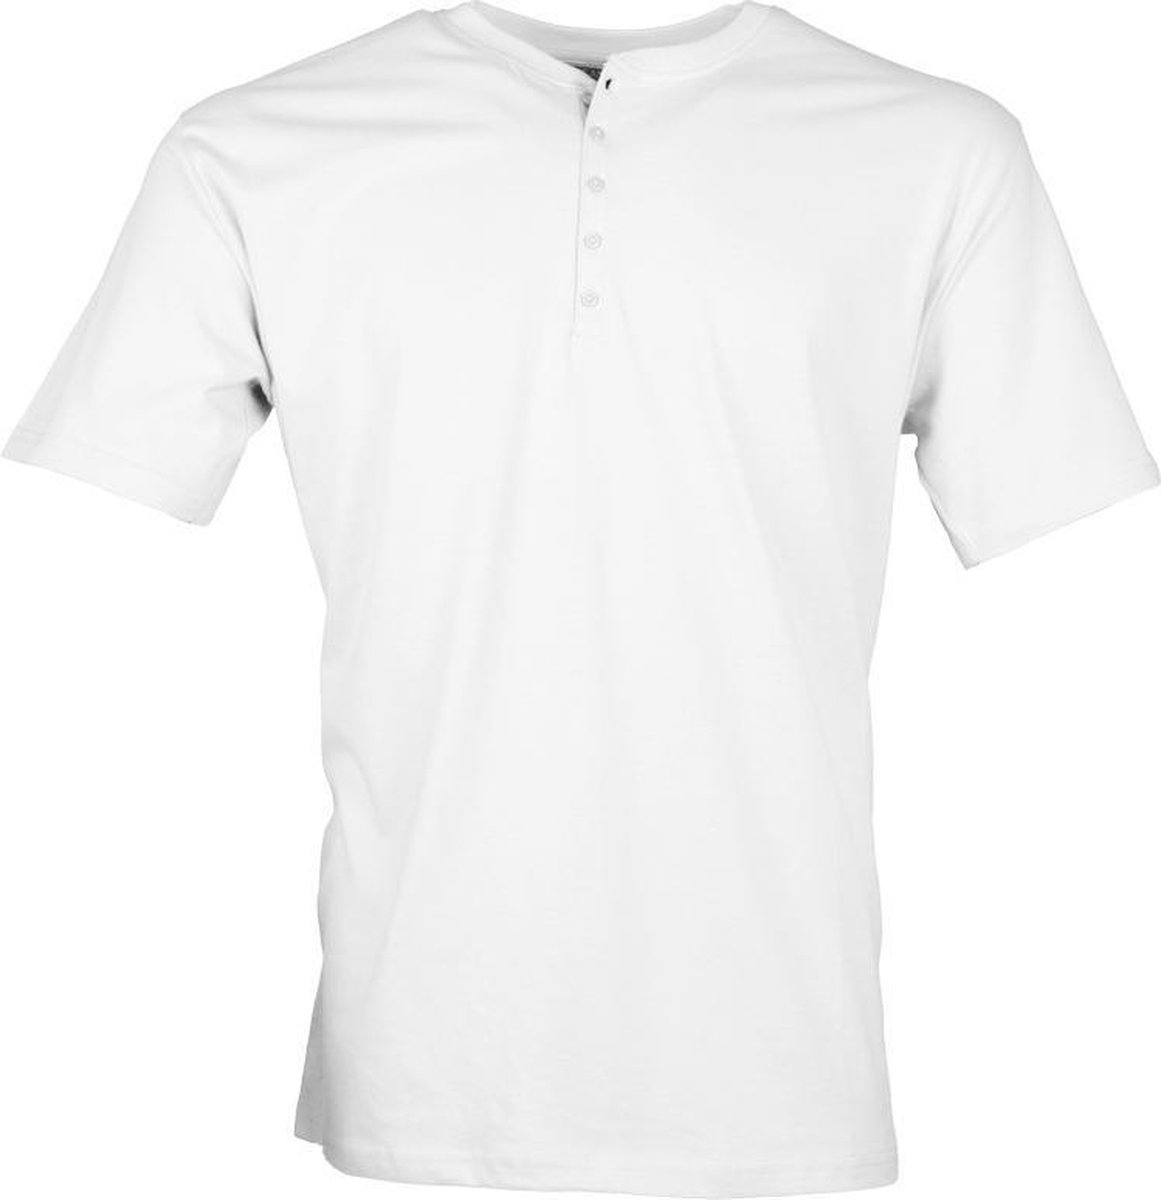 Losan Basic - Heren T-Shirt - Korte Mouw - Ronde Hals - Knoopjes - Wit - Maat M